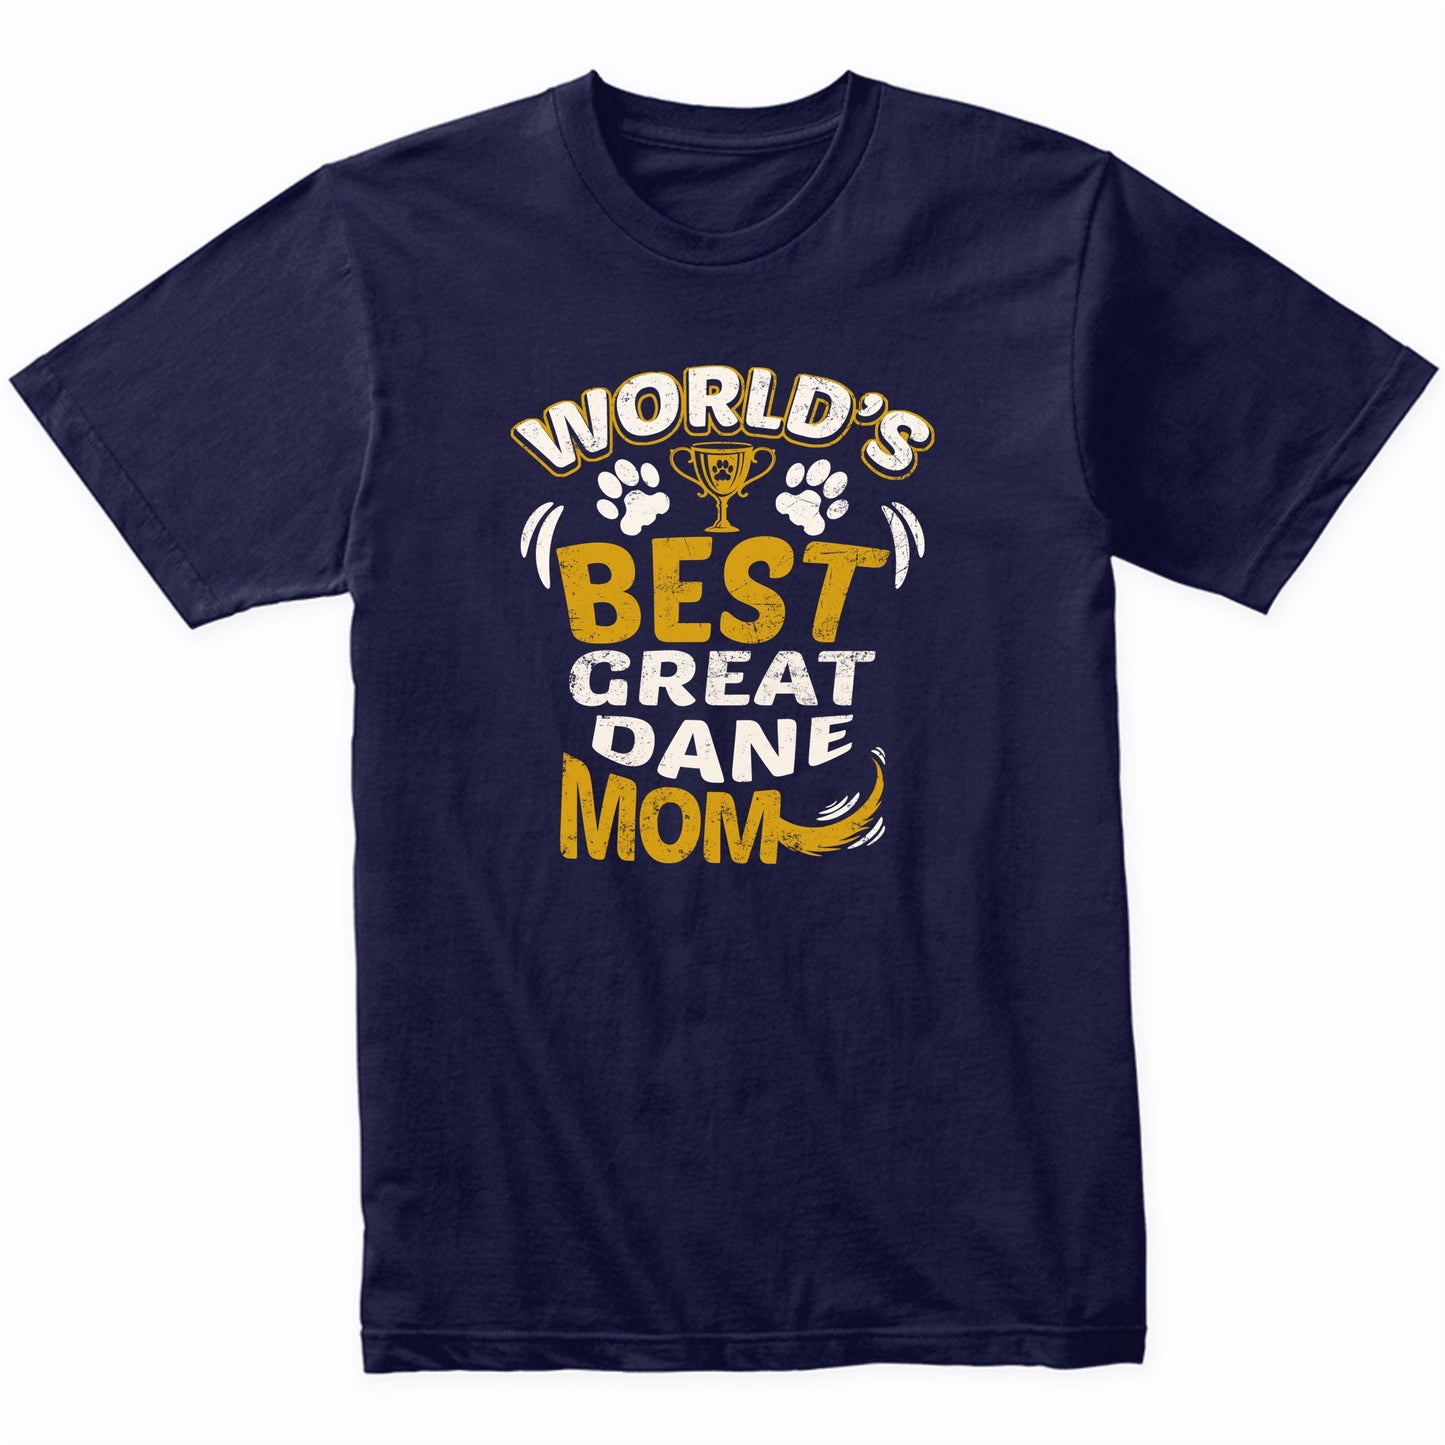 World's Best Great Dane Mom Graphic T-Shirt